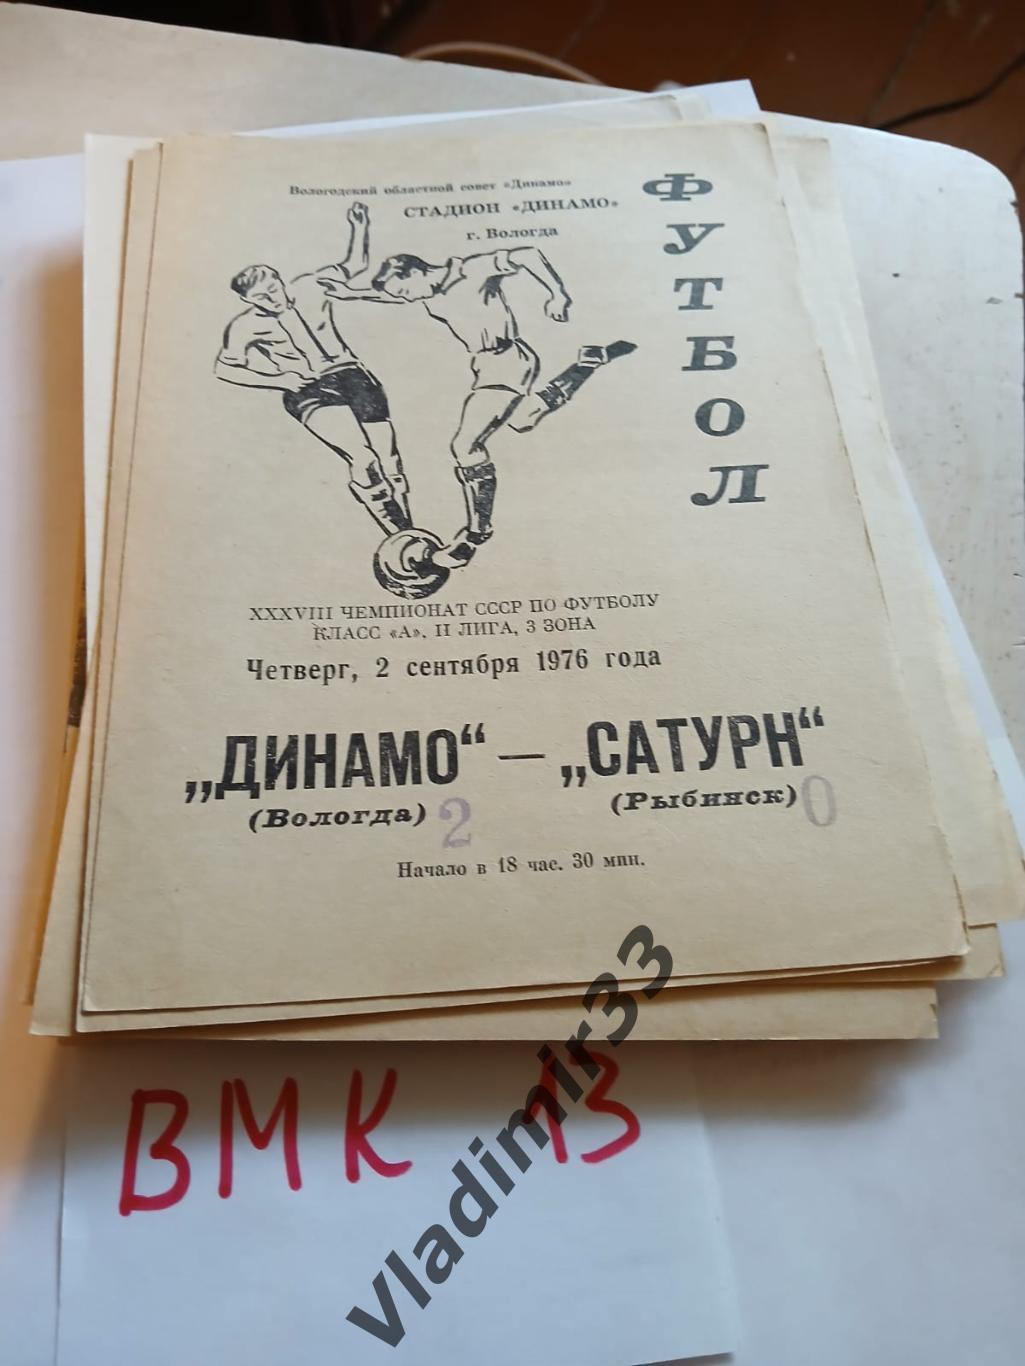 Динамо Вологда - Сатурн Рыбинск 1976